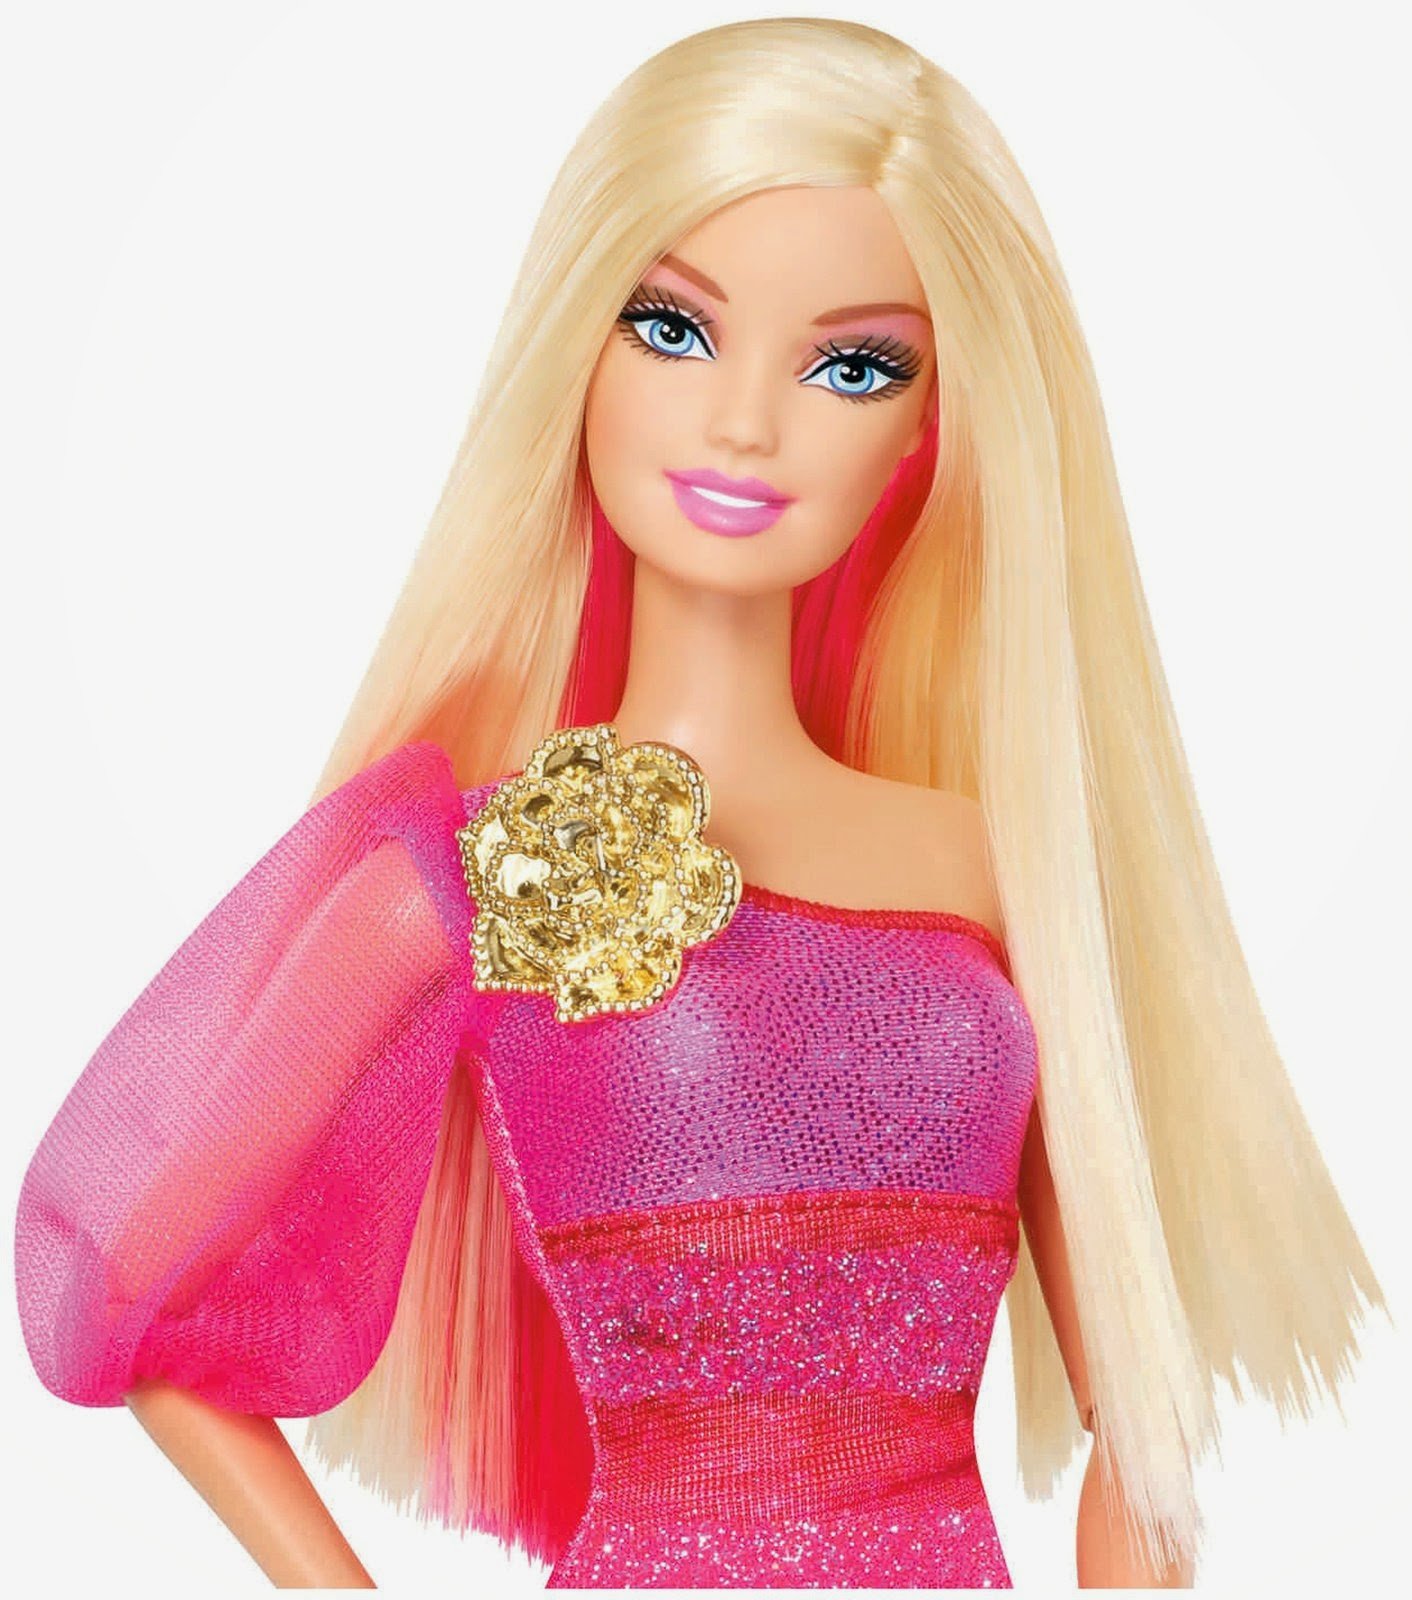 Barbiegirl. Барби Робертс. Барби Миллисент Робертс. Куклы Барби Доллс. Барби фашионистас 2013.